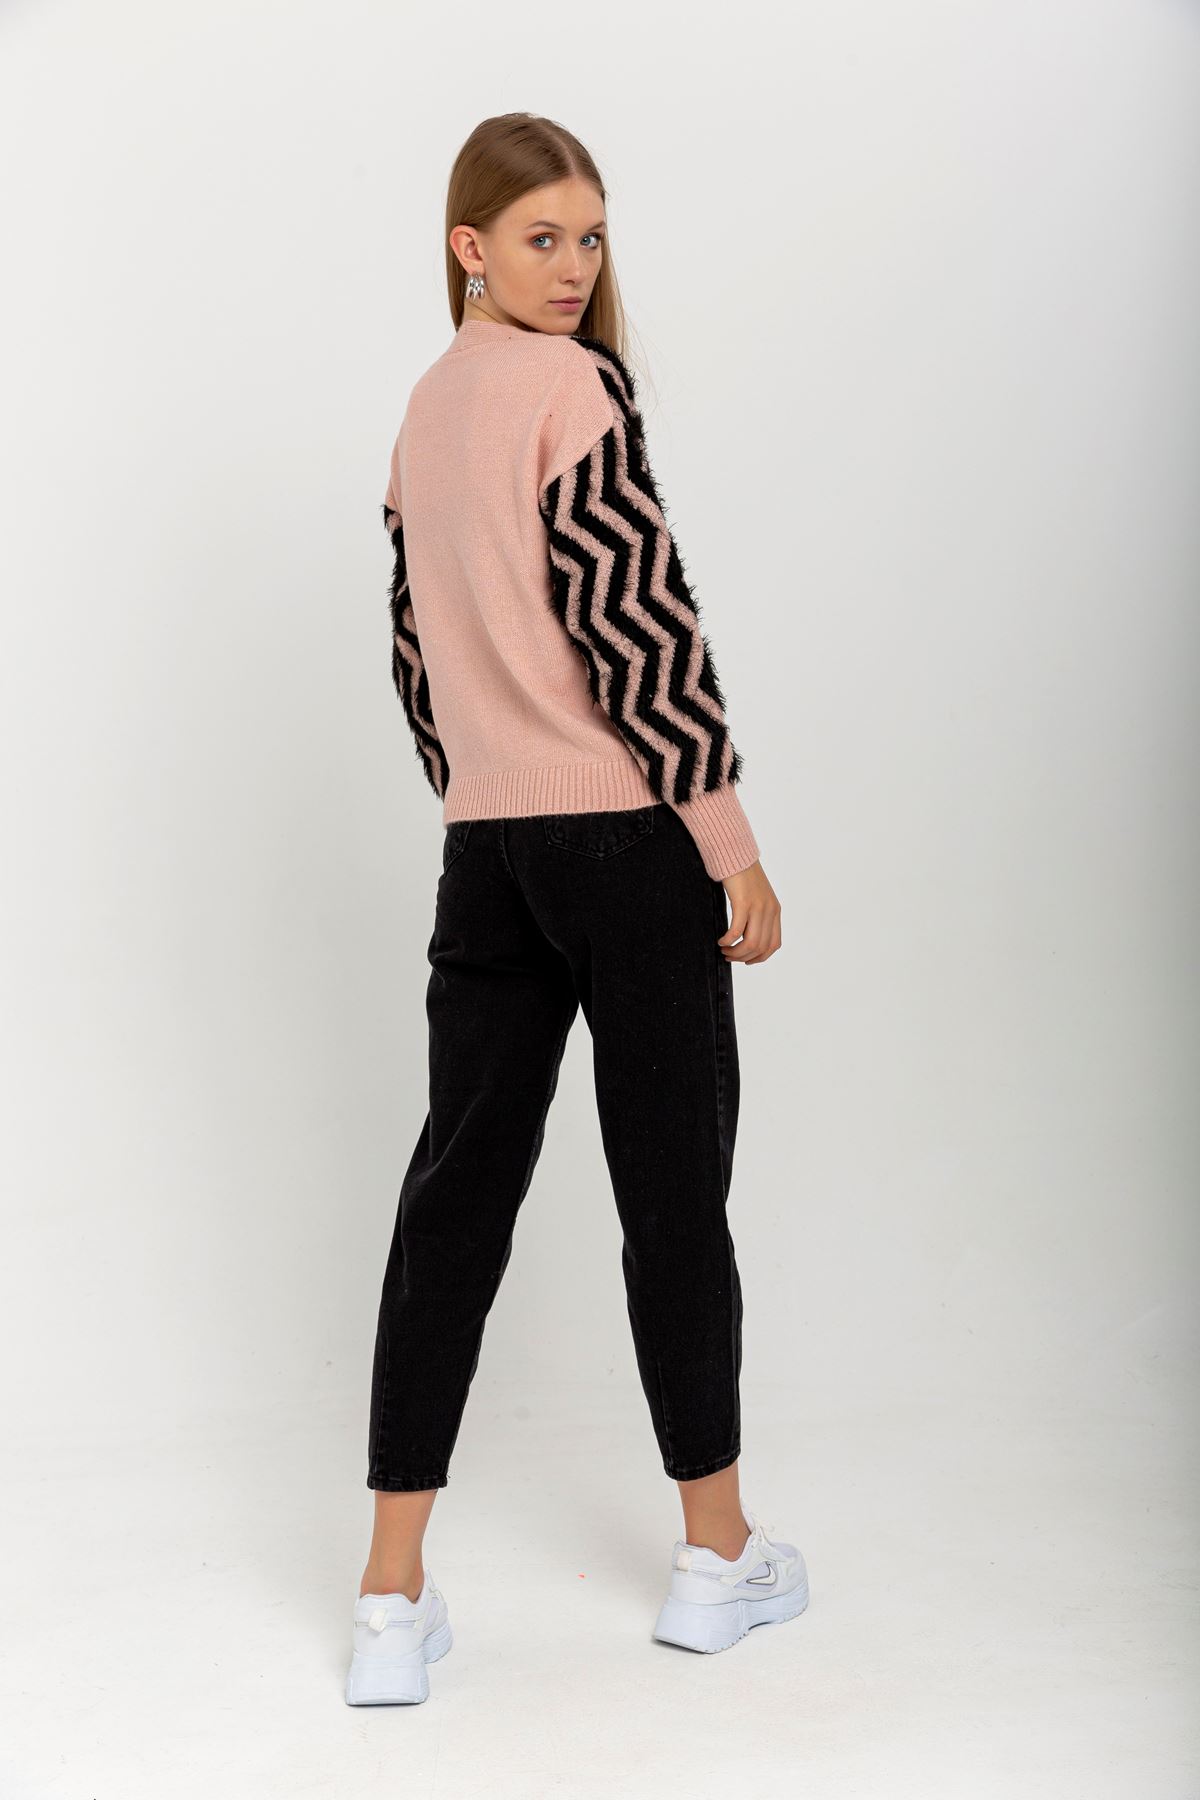 Knitwear Fabric Long Sleeve V-Neck Short Fringed Women Cardigan - Light Pink